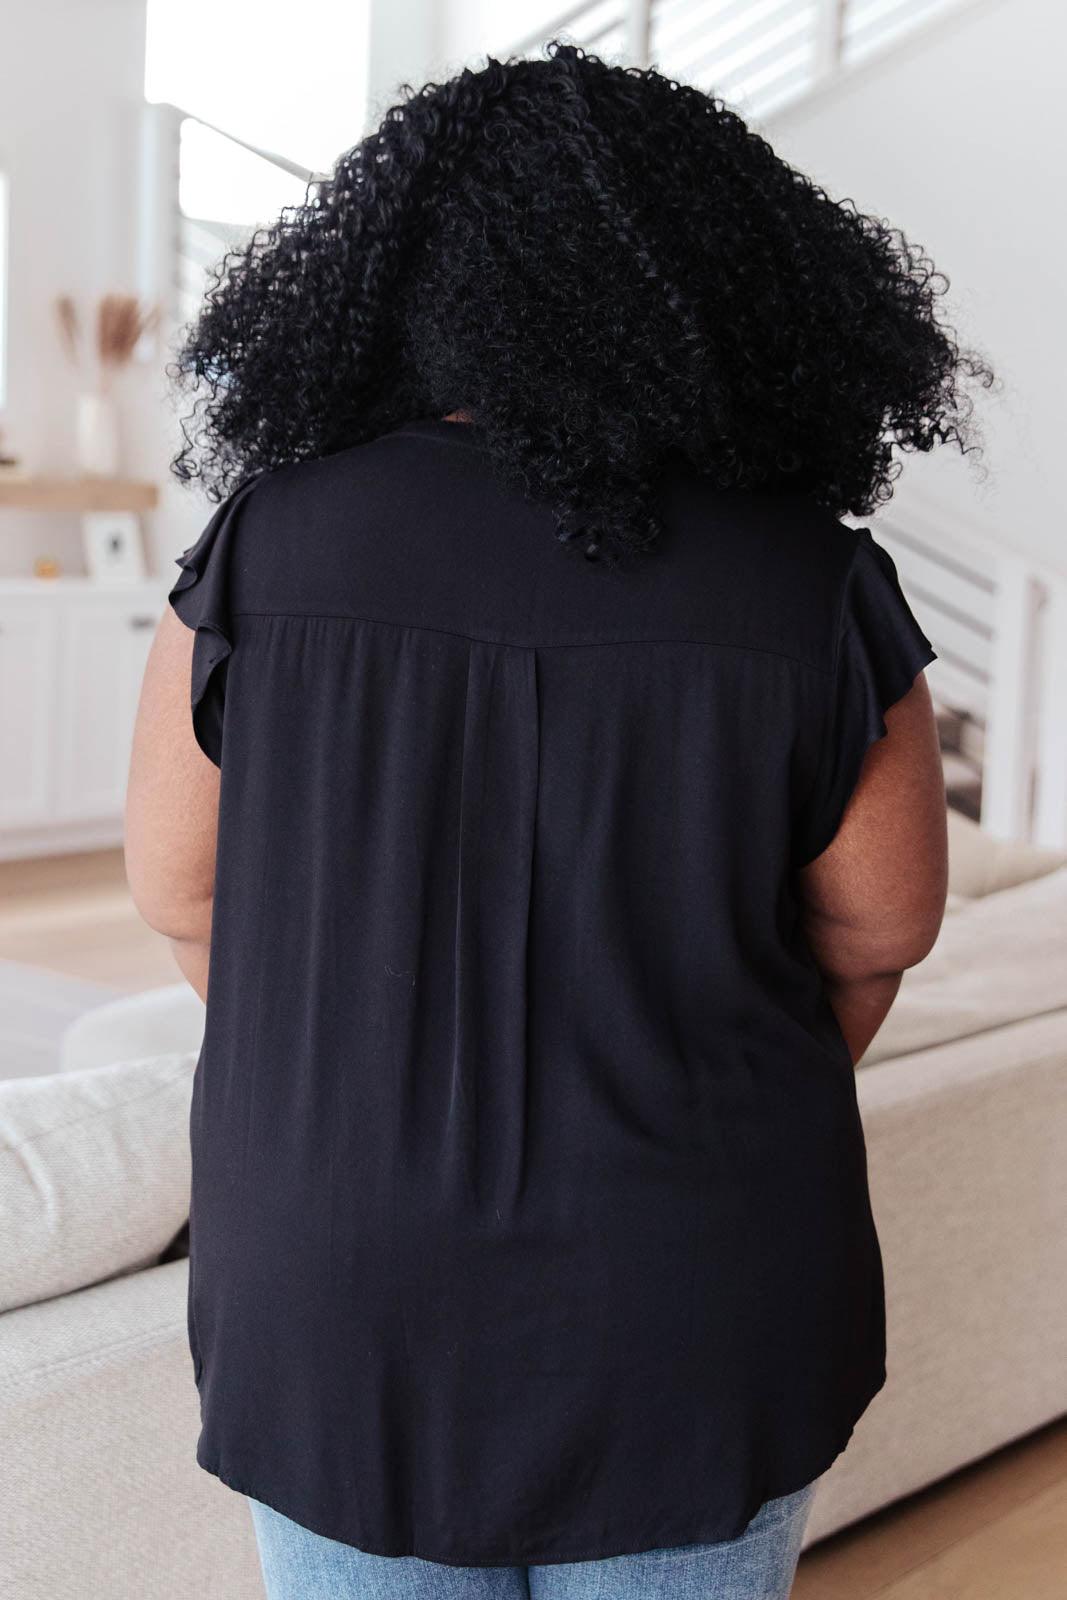 Fantastic Ruffle Sleeve in Black - Alexander Jane Boutique  Womens